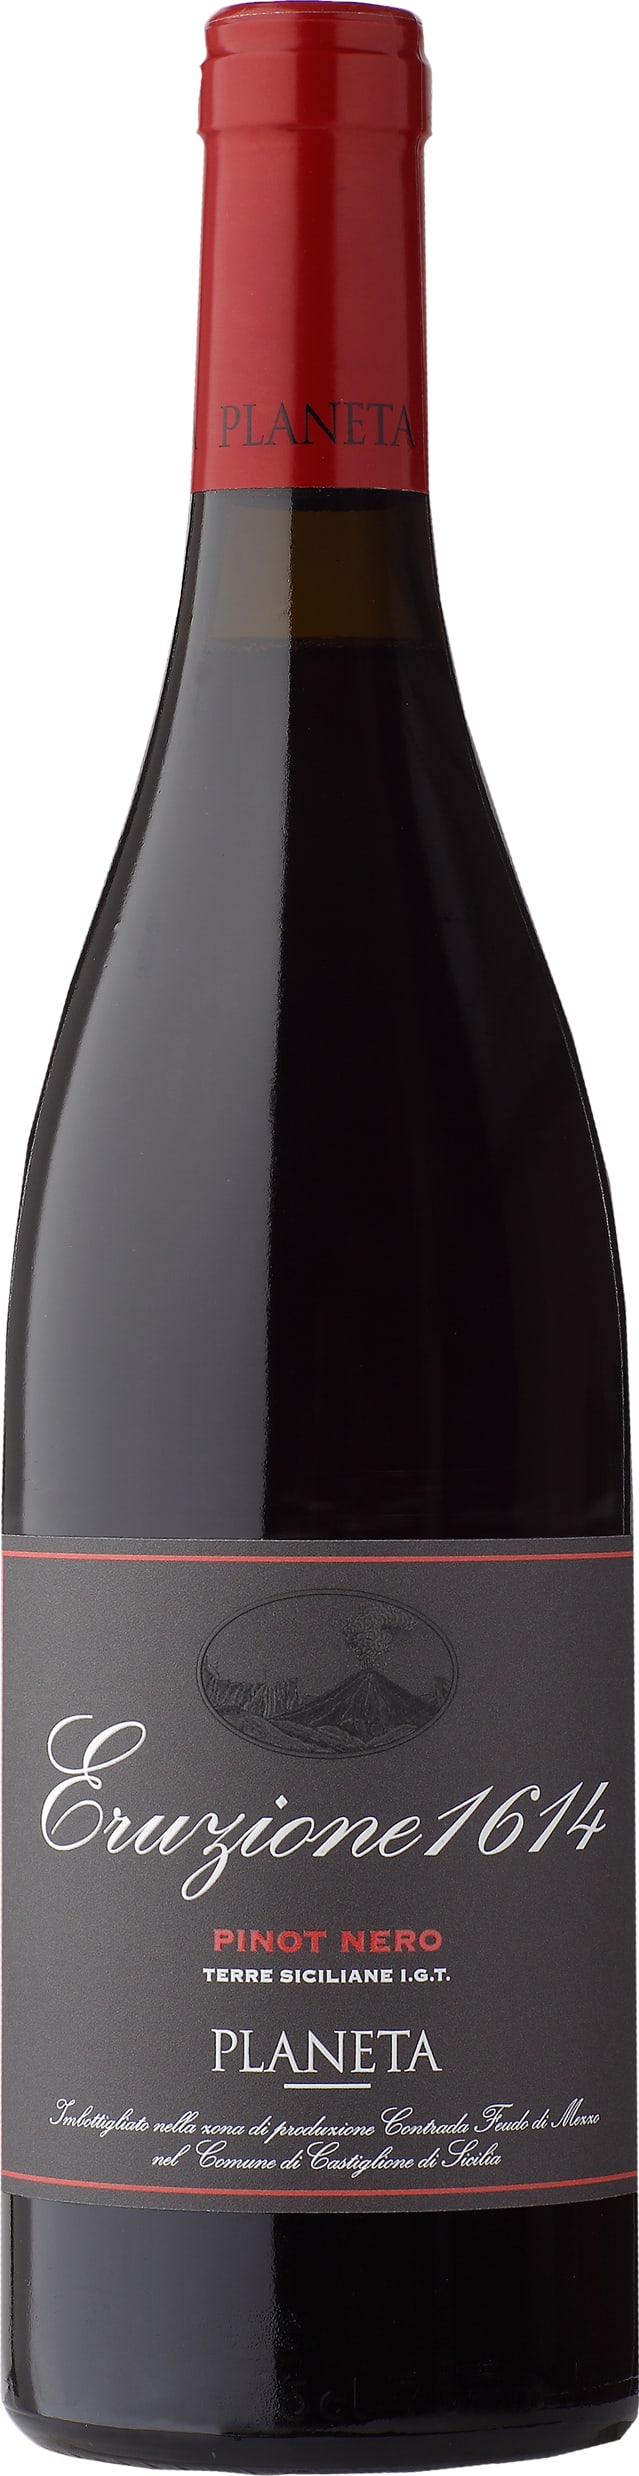 Planeta Eruzione 1614 Etna Pinot Nero 2020 75cl - Buy Planeta Wines from GREAT WINES DIRECT wine shop